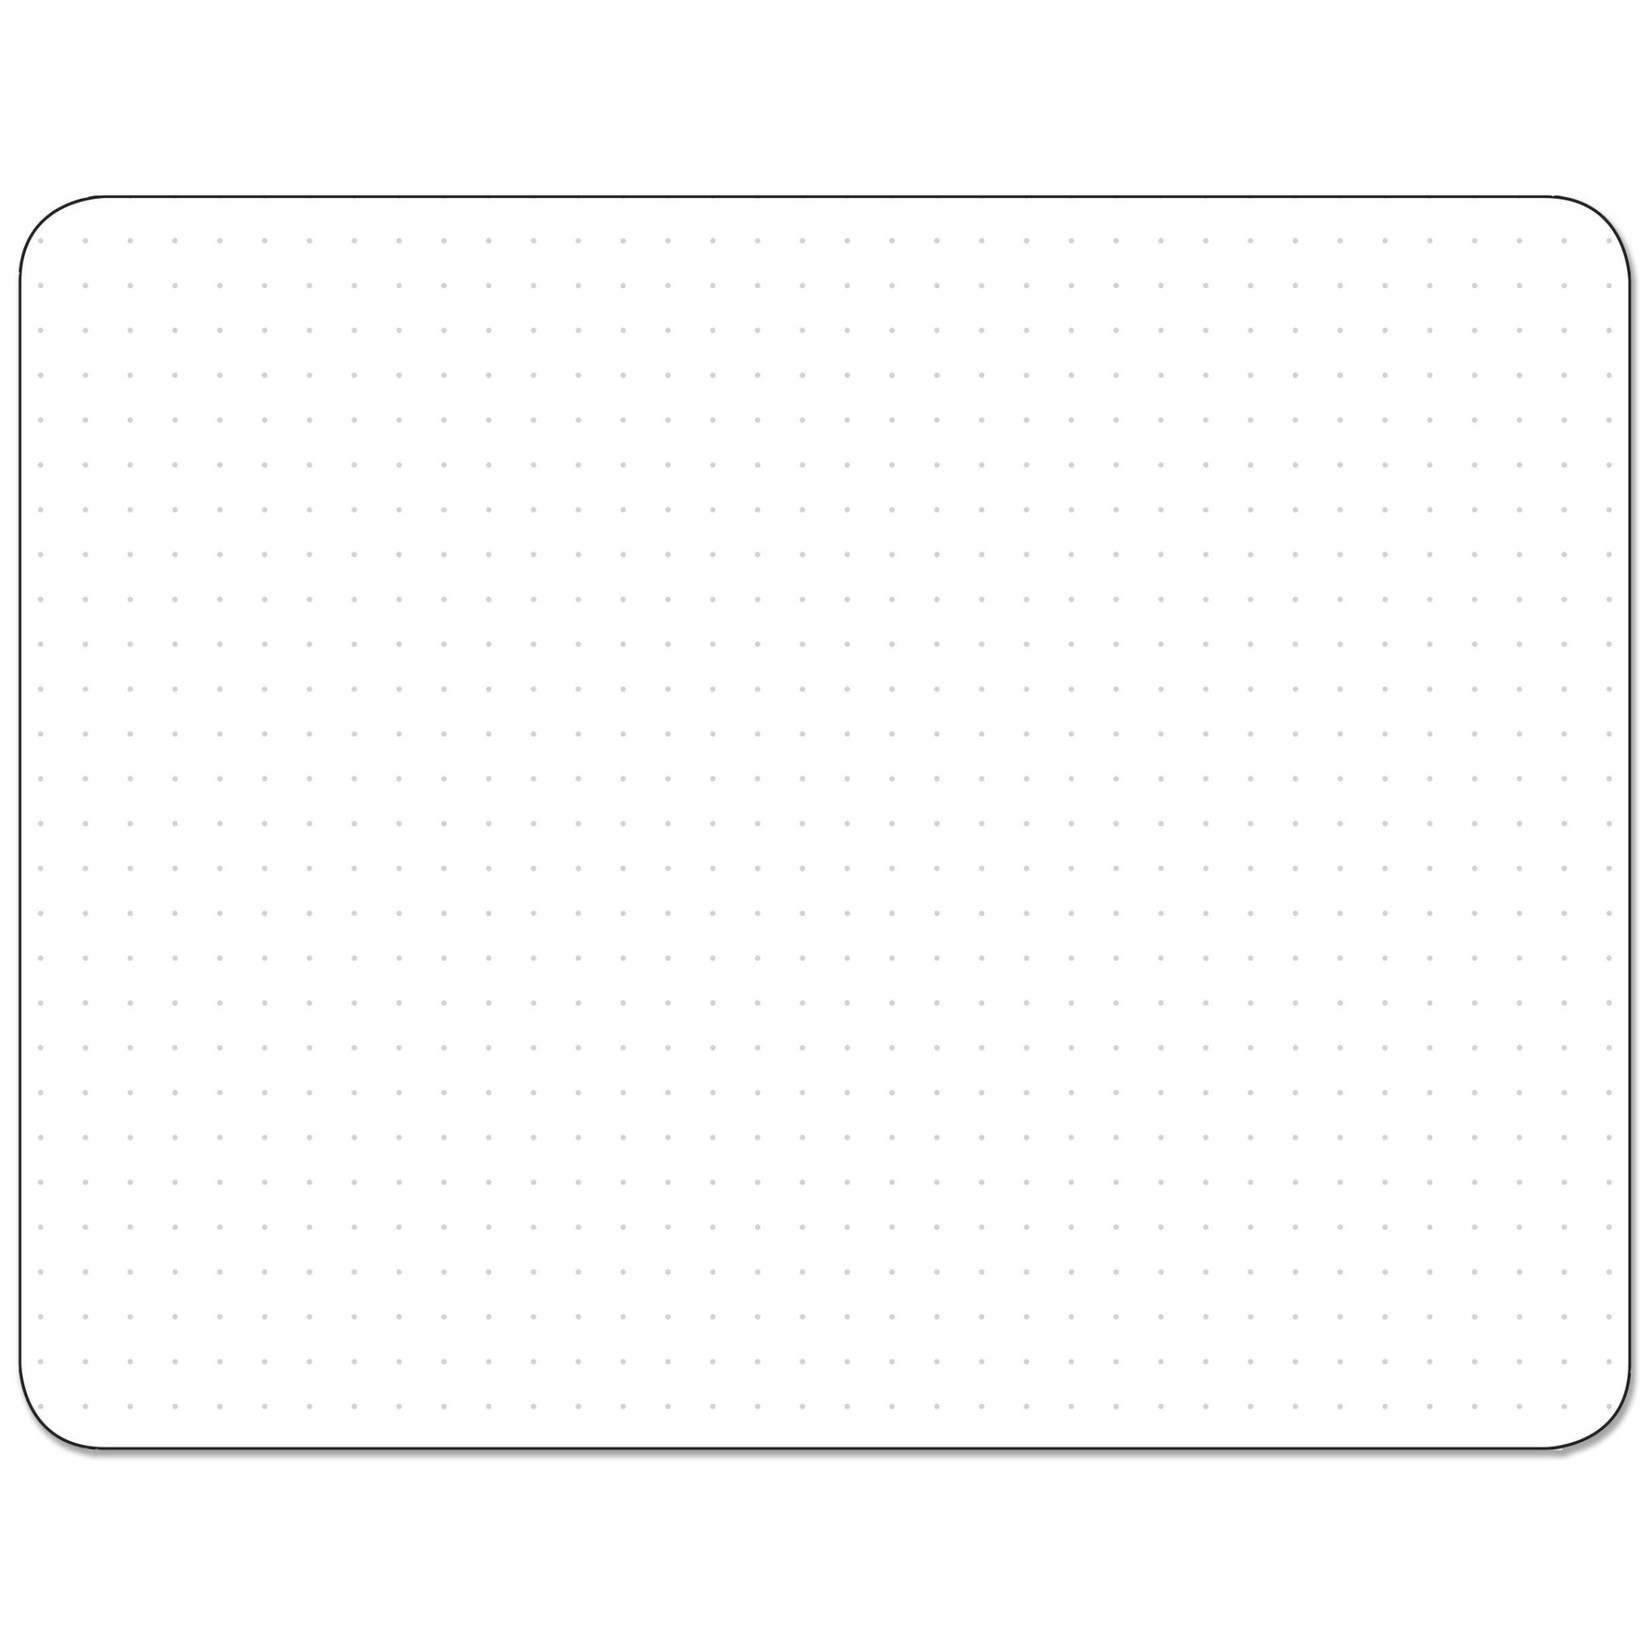 Peter Pauper Press Jotter Notebooks: Dandelion Wishes (3-pack) (Dot Grid Pattern)